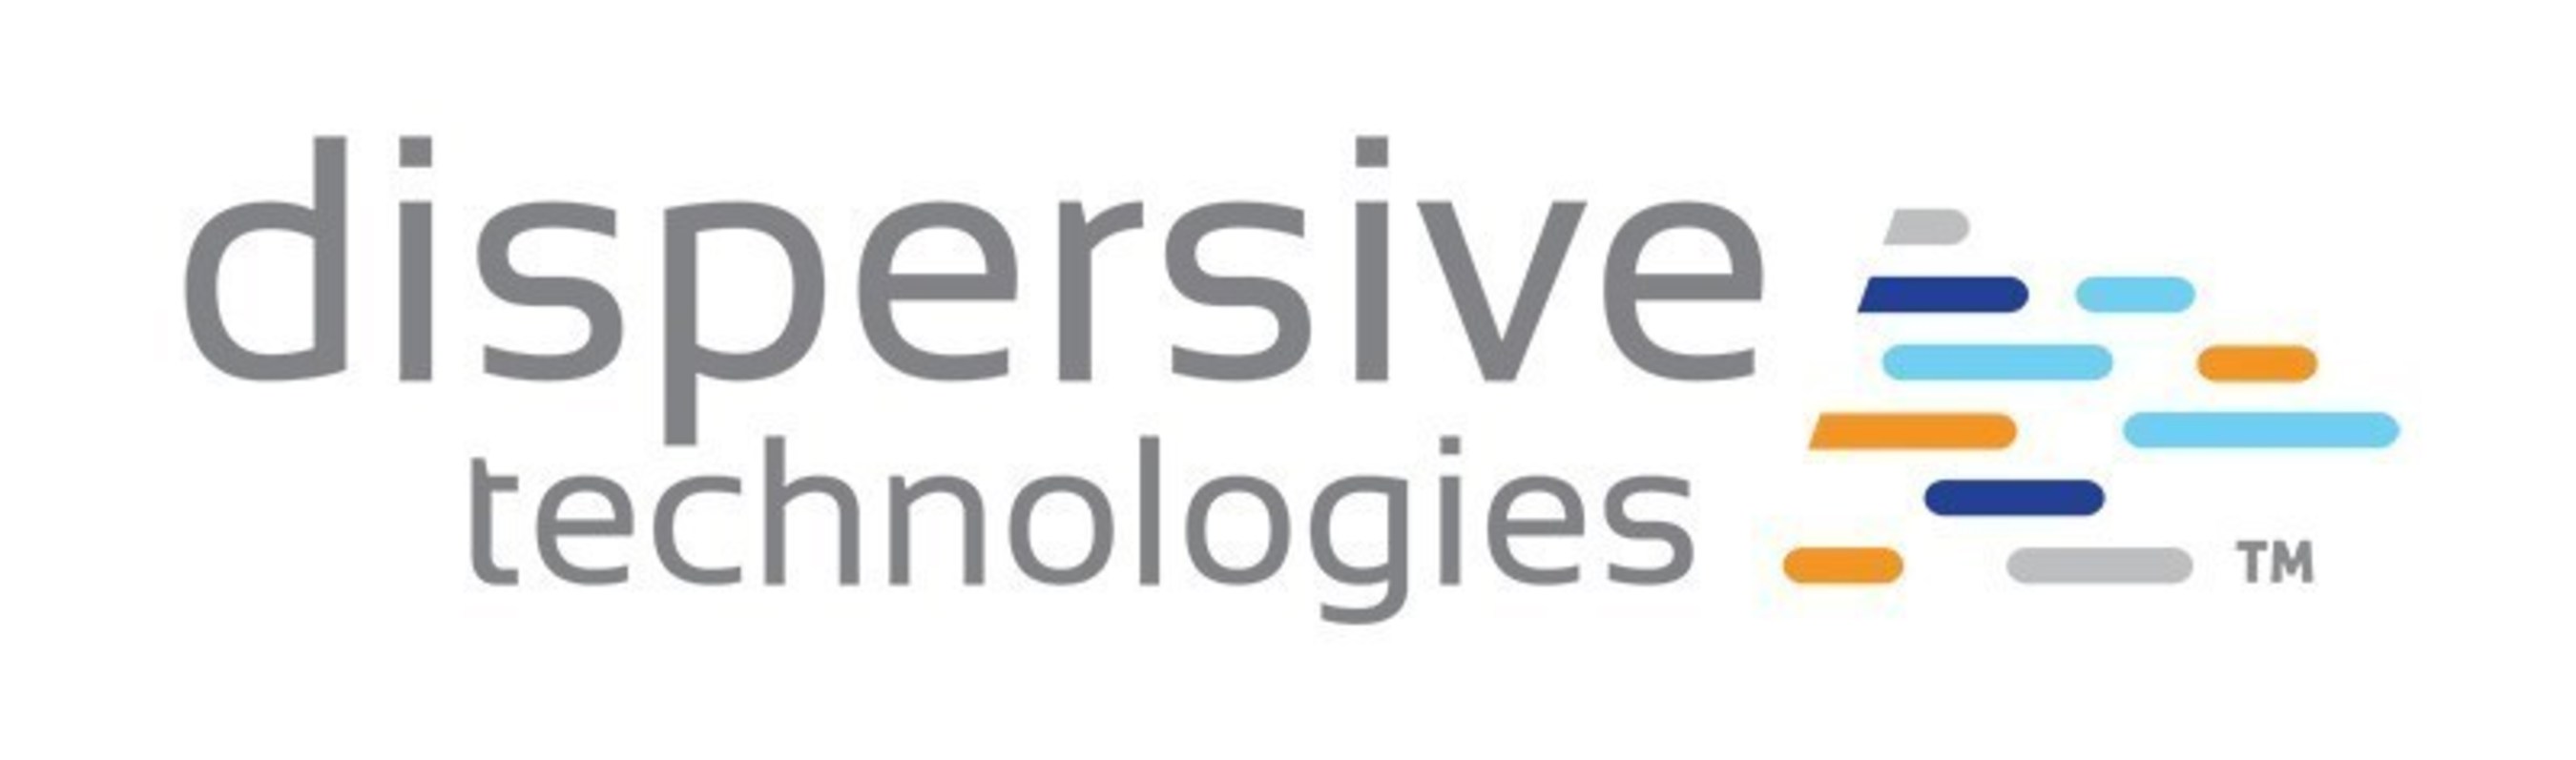 Dispersive Technologies to Exhibit at ONUG